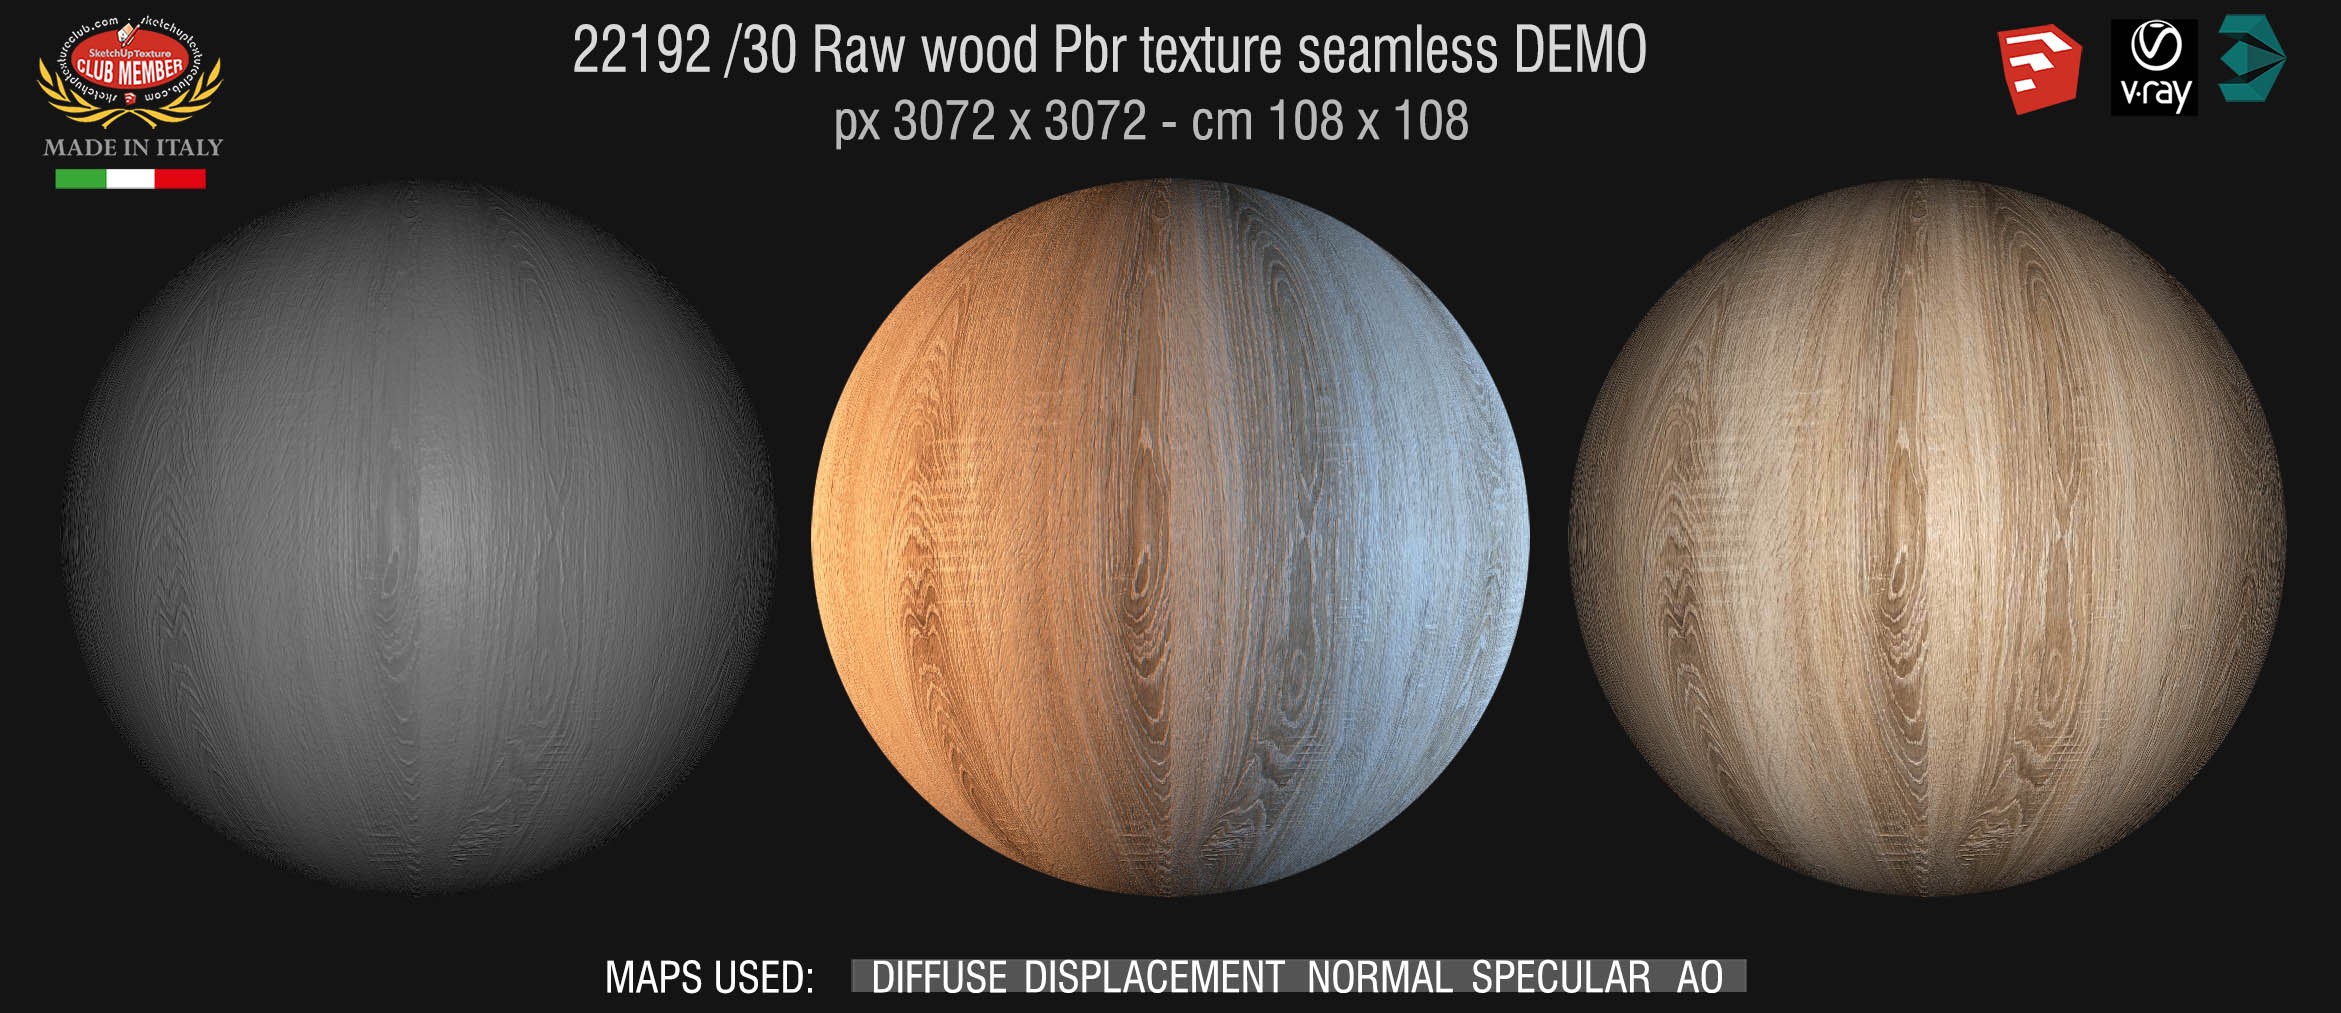 22192/30 Raw wood PBR texture seamless DEMO